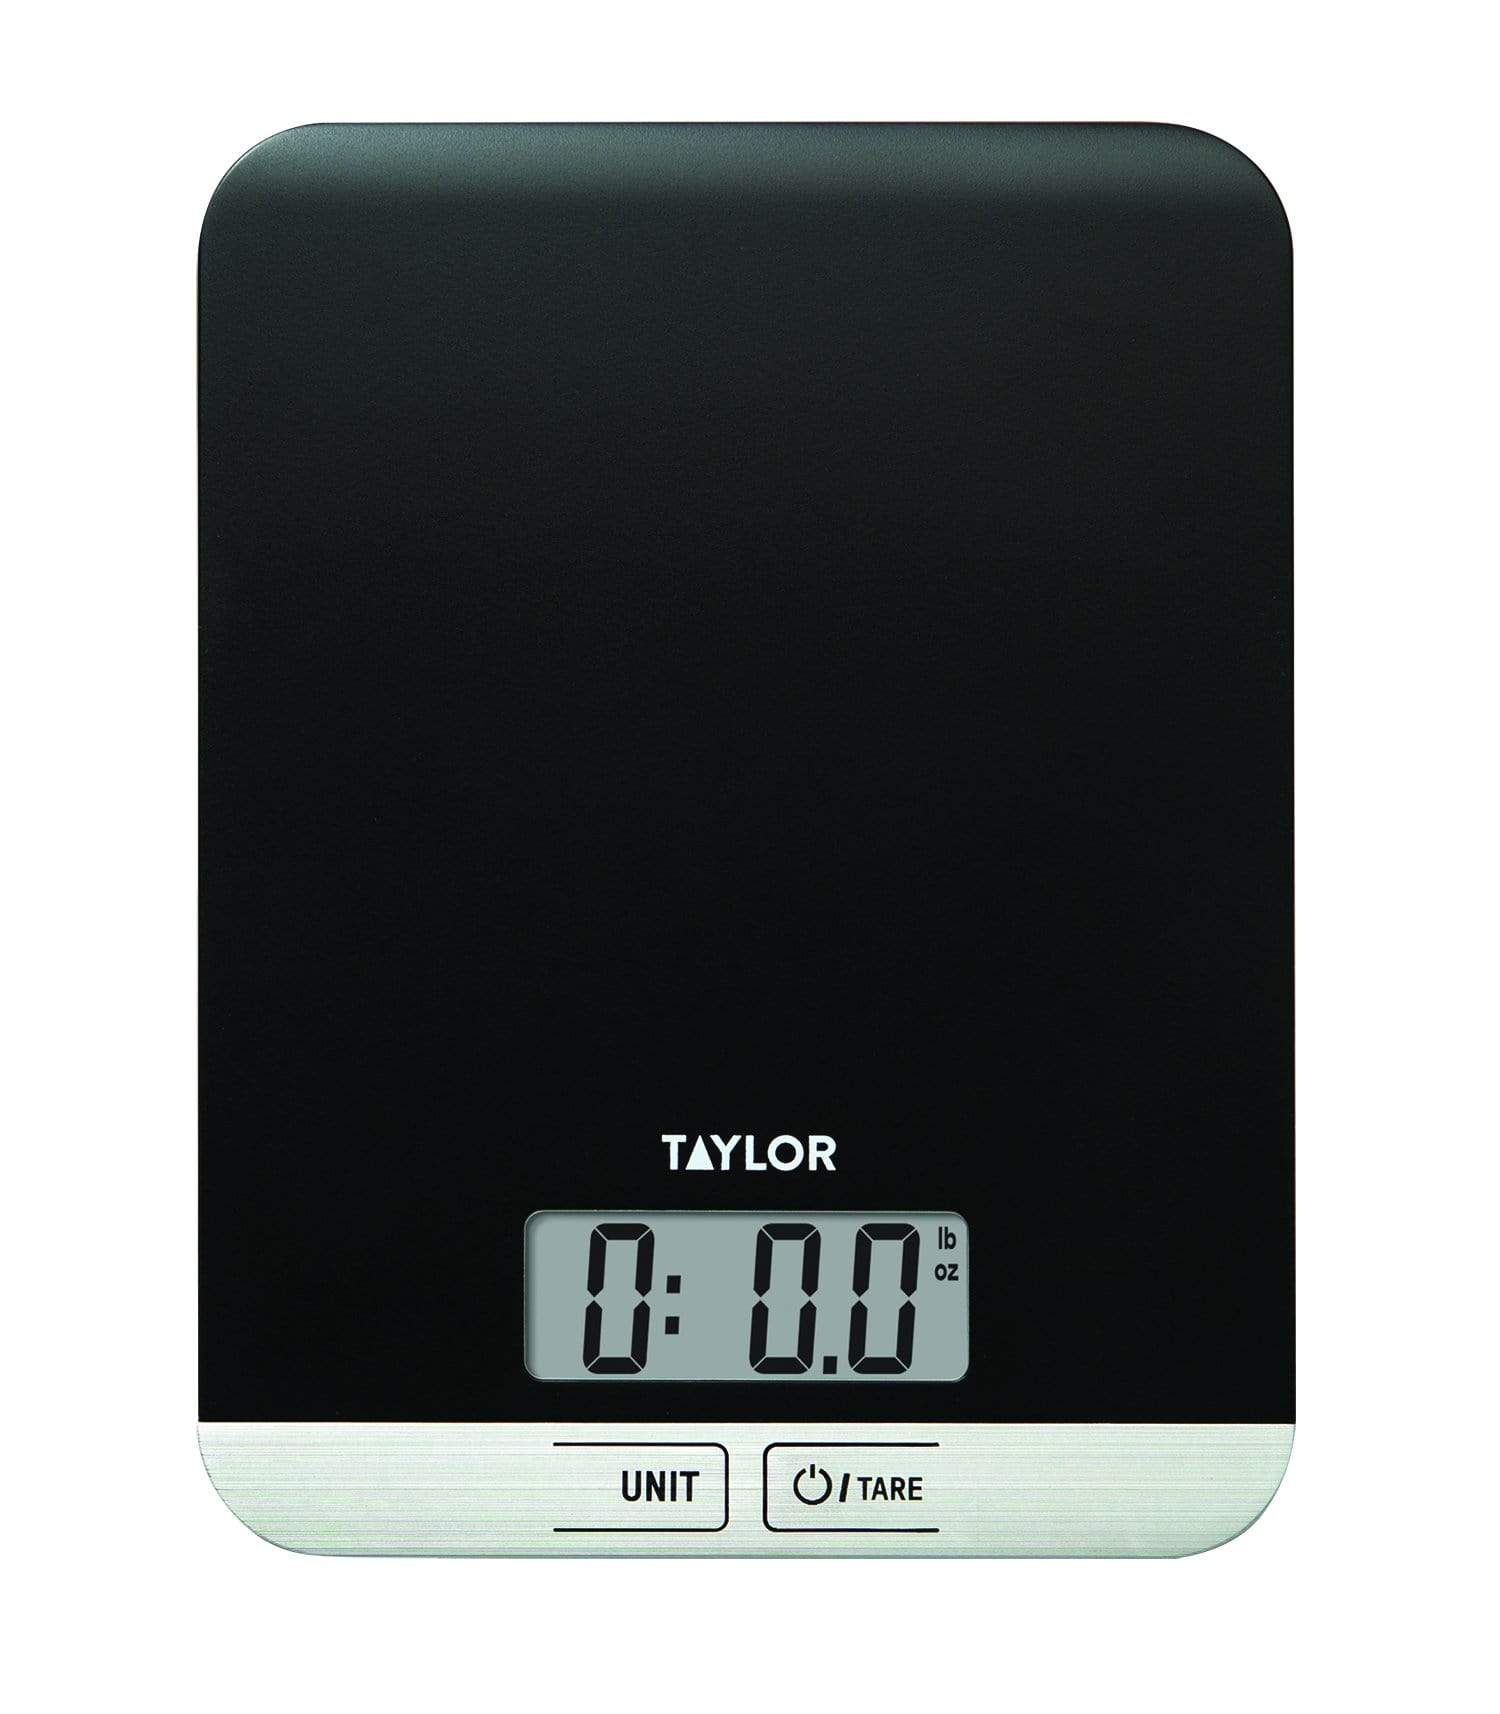 Taylor Digital Kitchen Scale Stainless Steel Platform